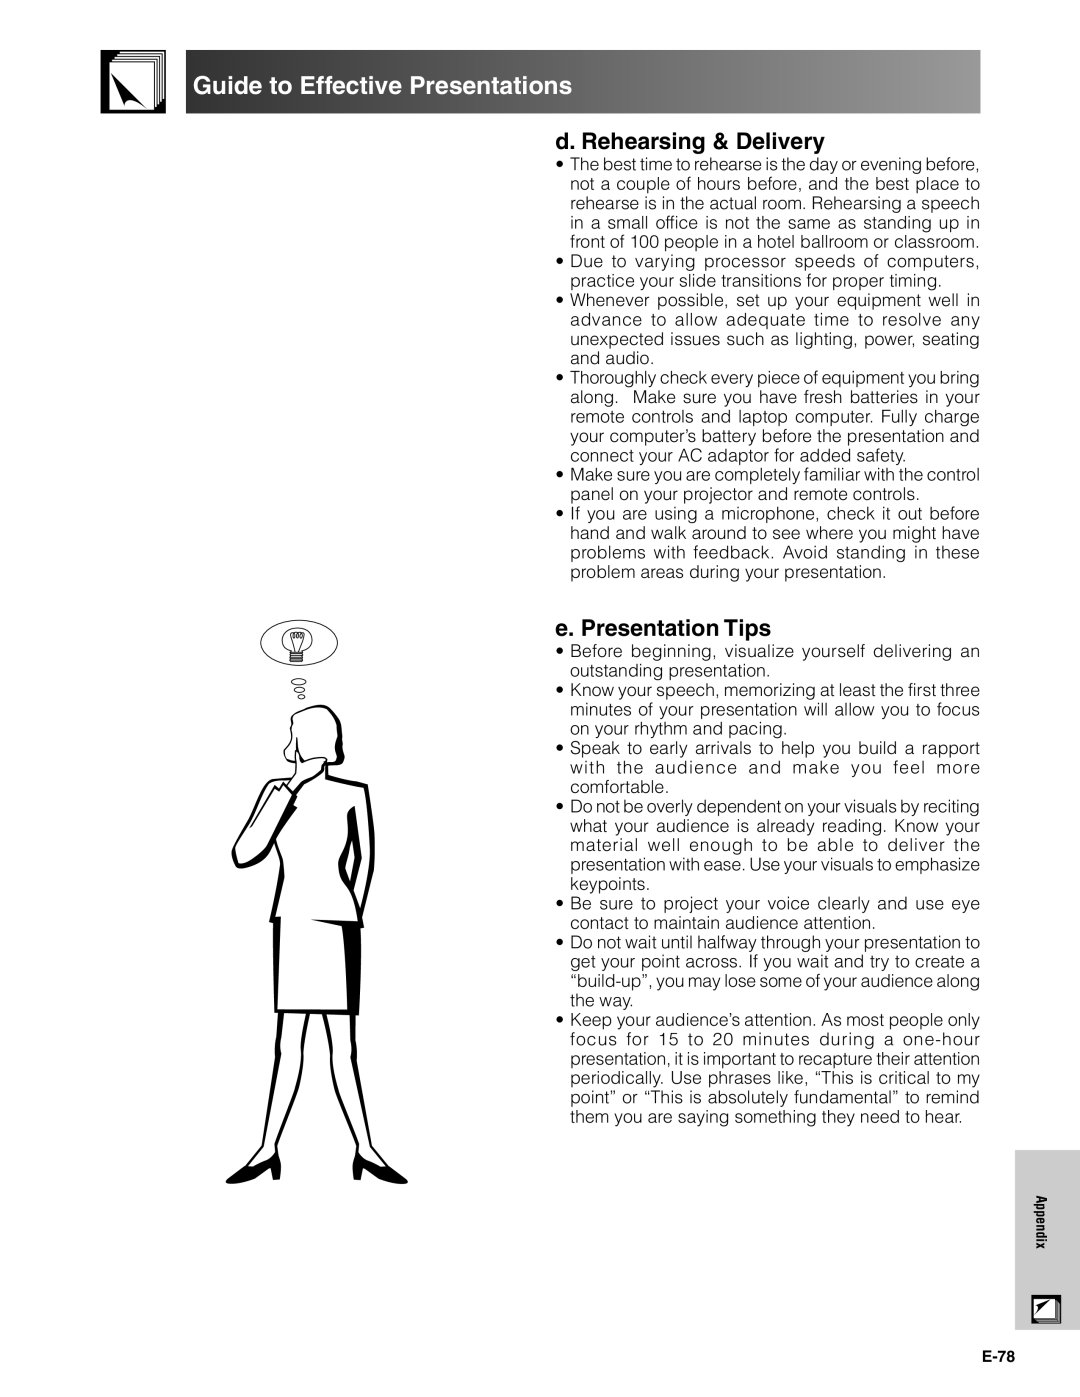 Sharp XG-V10XU operation manual d. Rehearsing & Delivery, e. Presentation Tips, Guide to Effective Presentations, E-78 